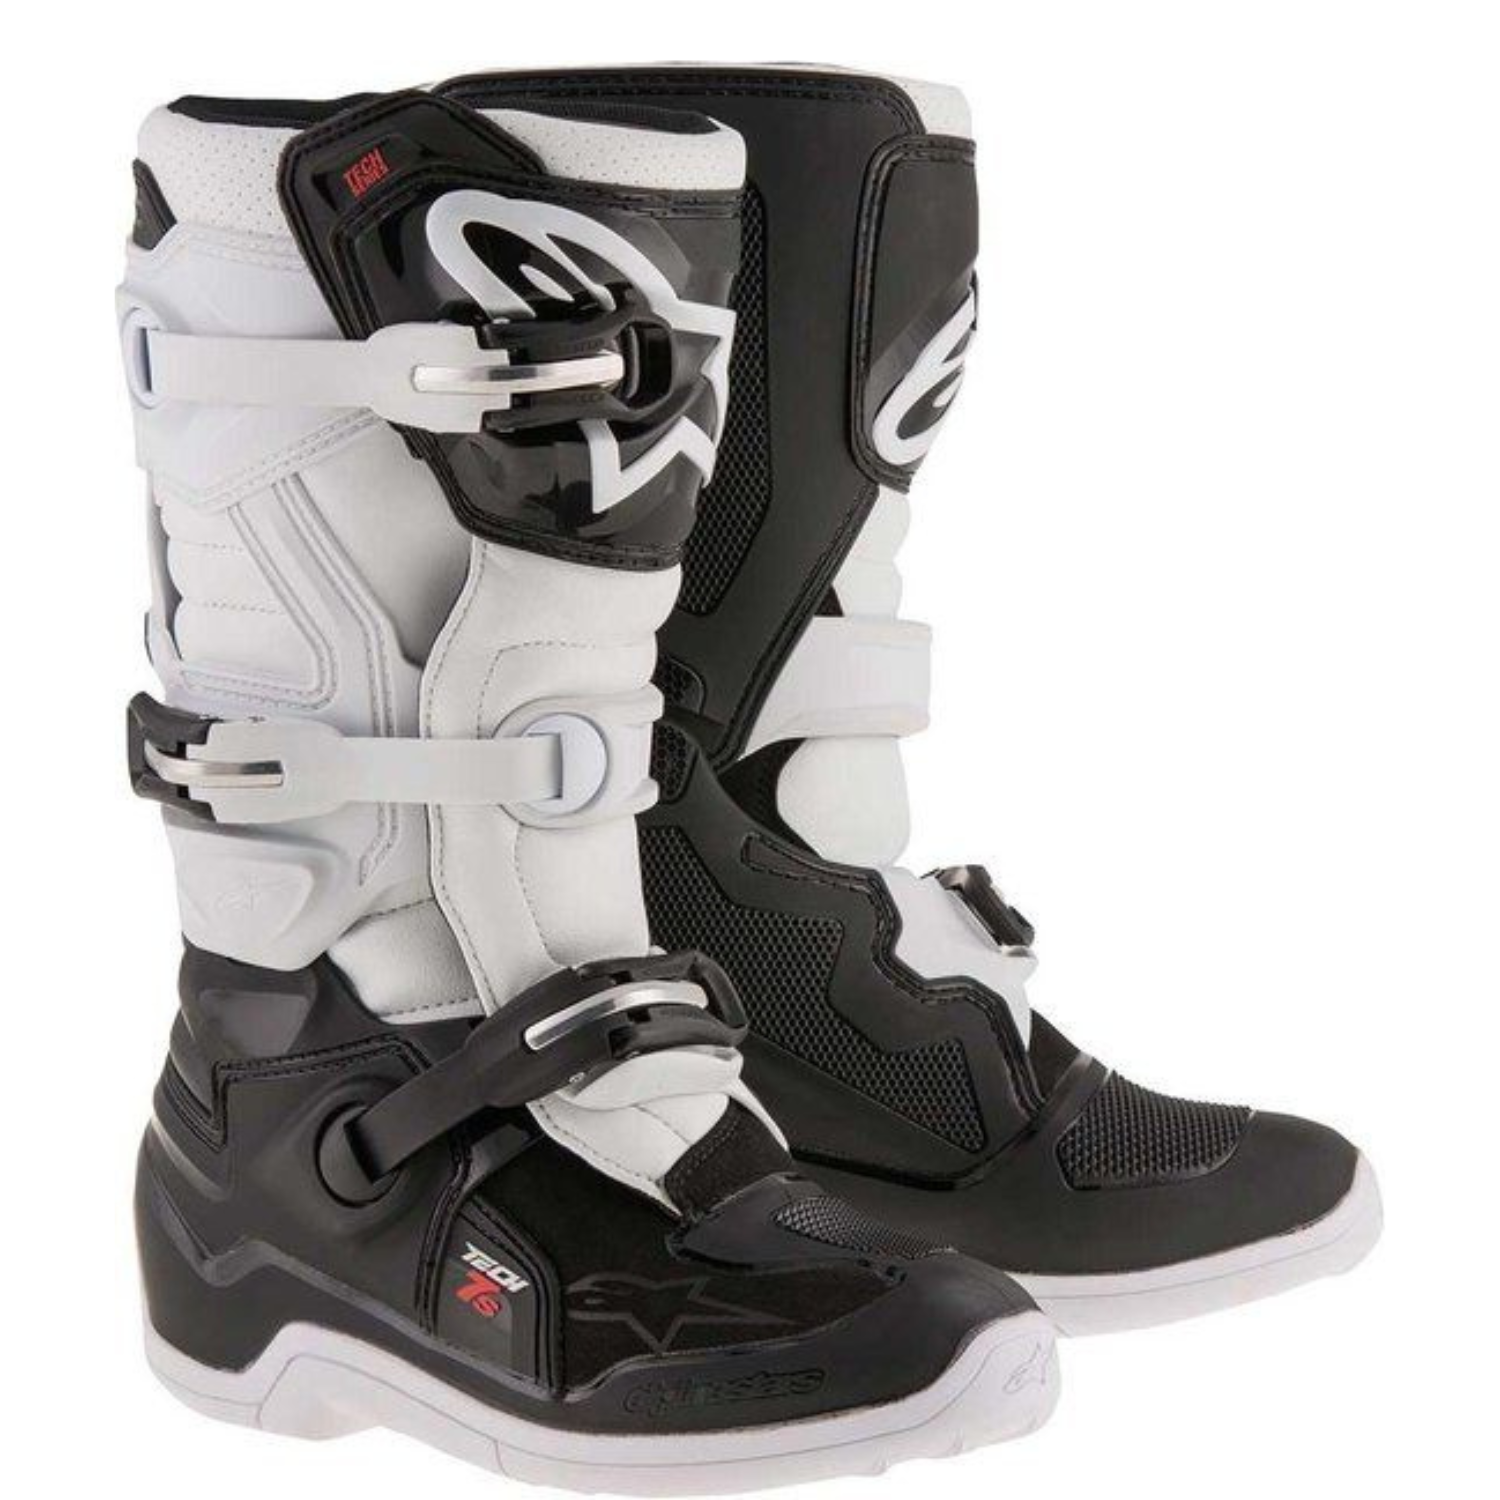 Image of Alpinestars Tech 7 S Black White Boots Size US 8 ID 8051194974938